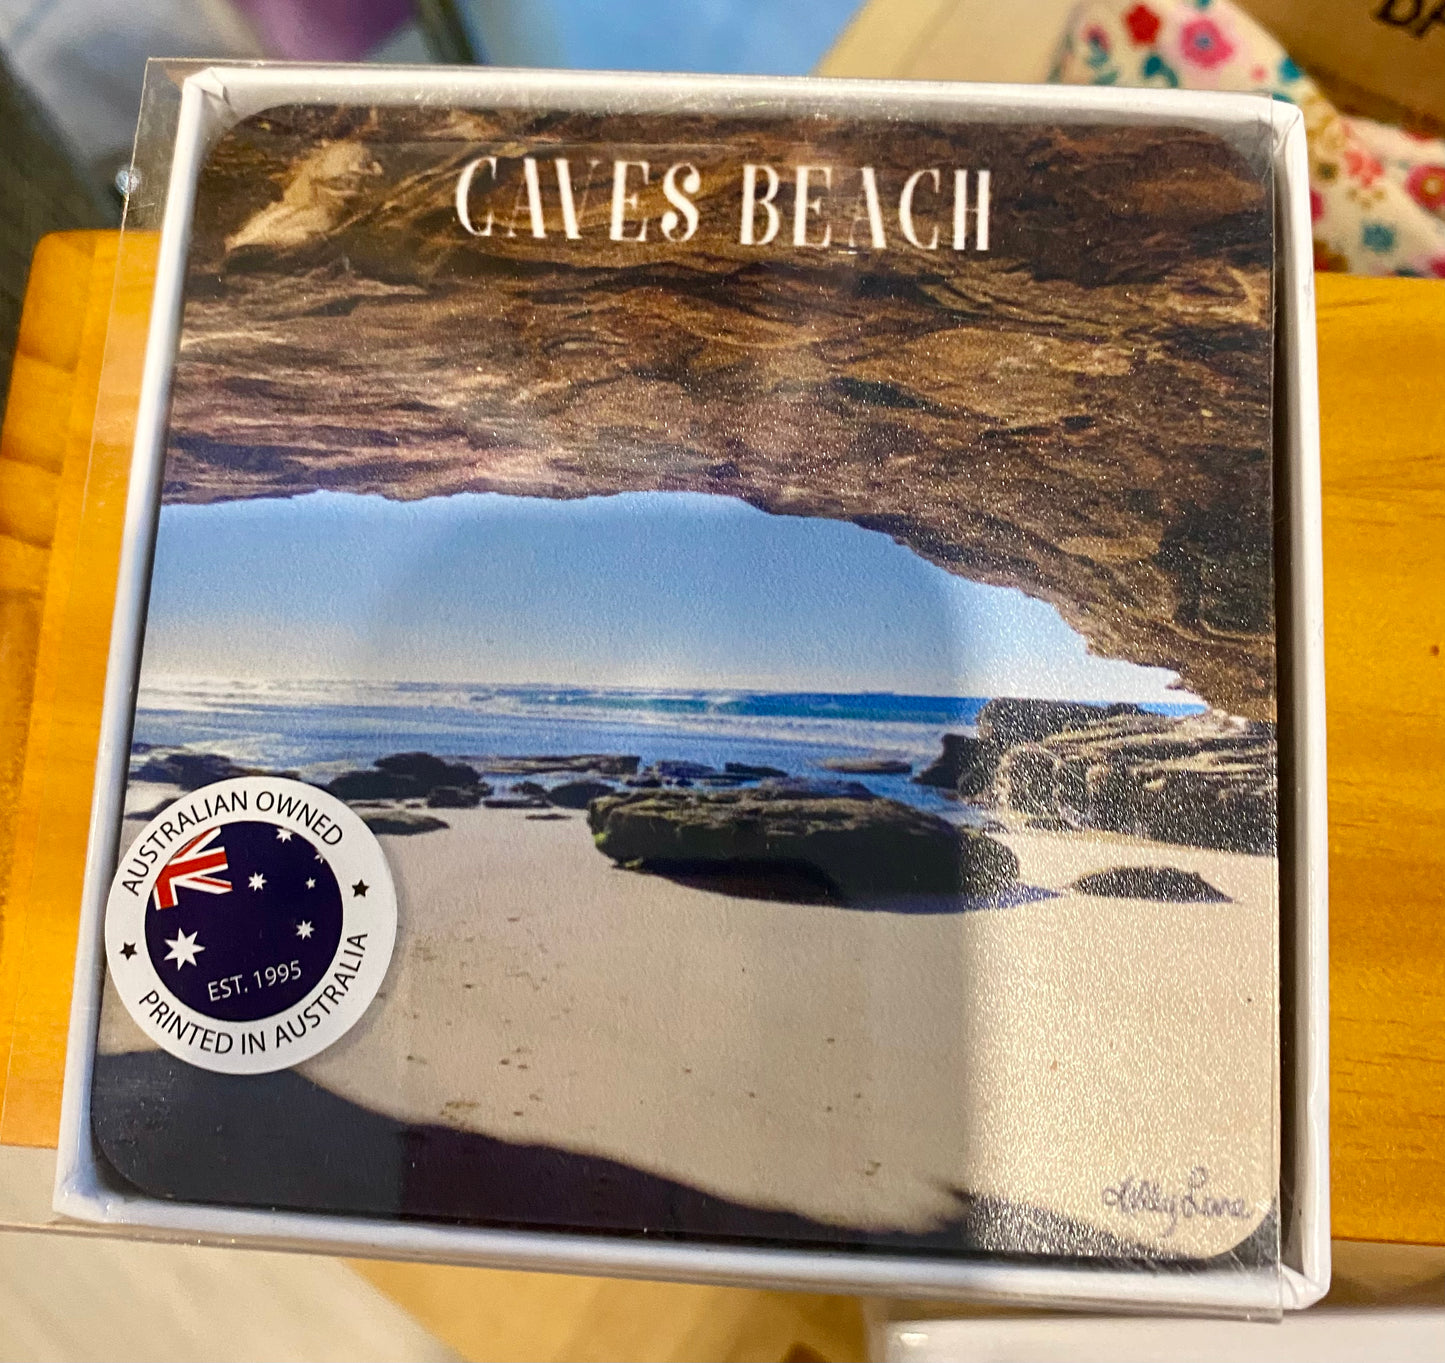 Caves beach square coaster